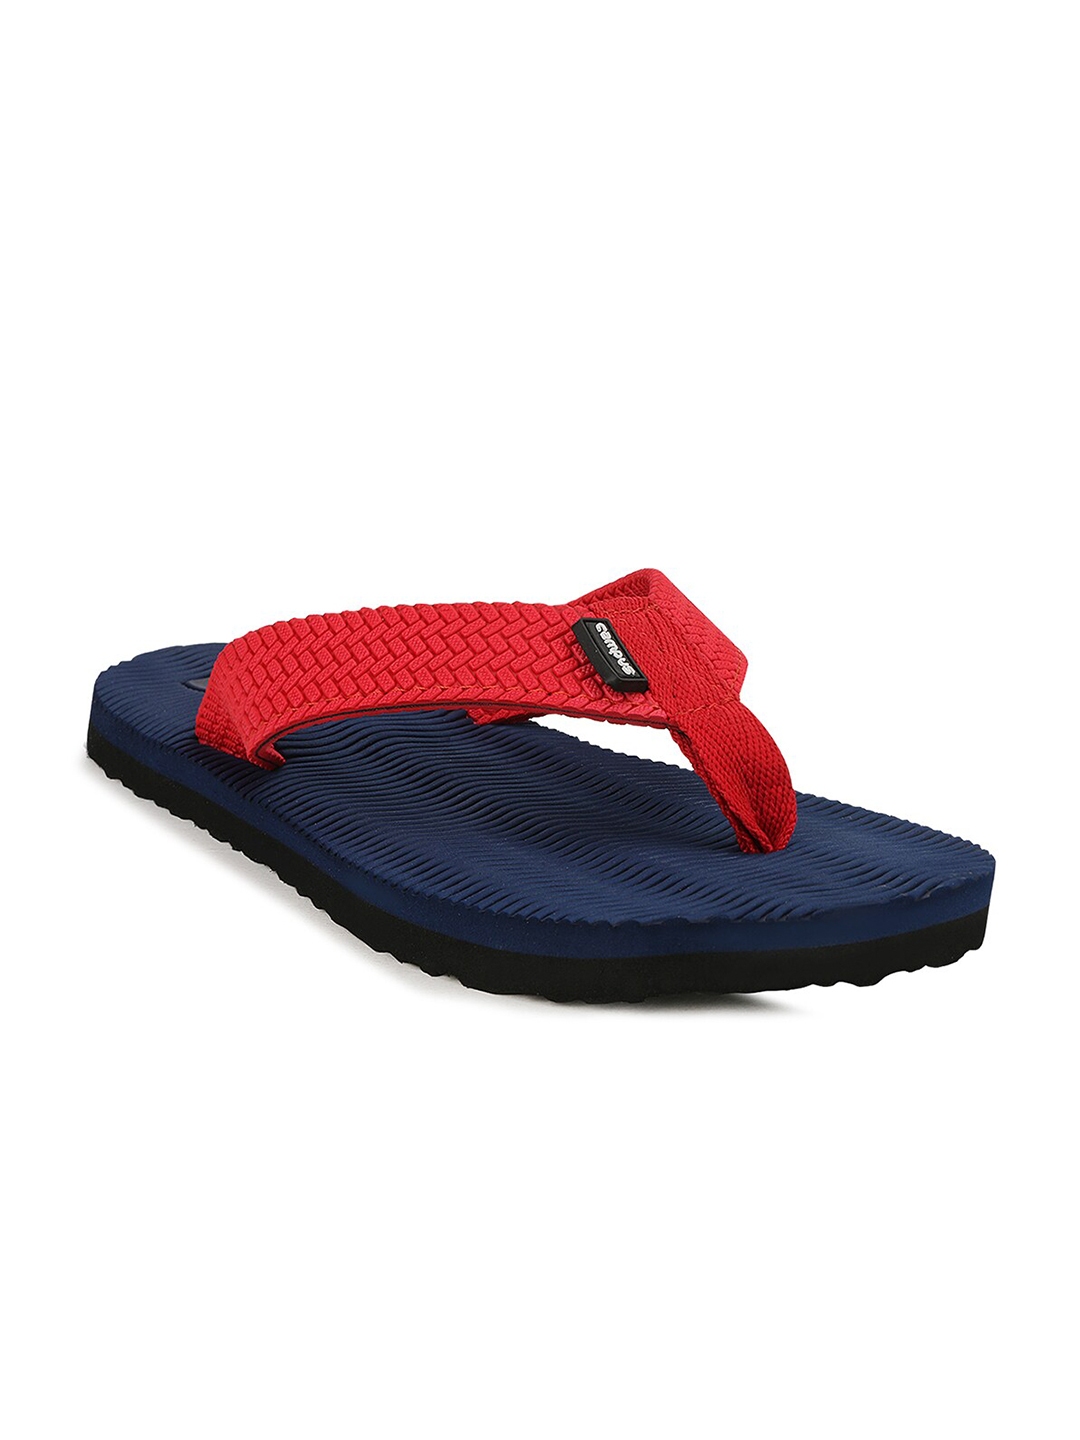 Buy Campus Men Red & Navy Blue Slip On Flip Flops - Flip Flops for Men ...